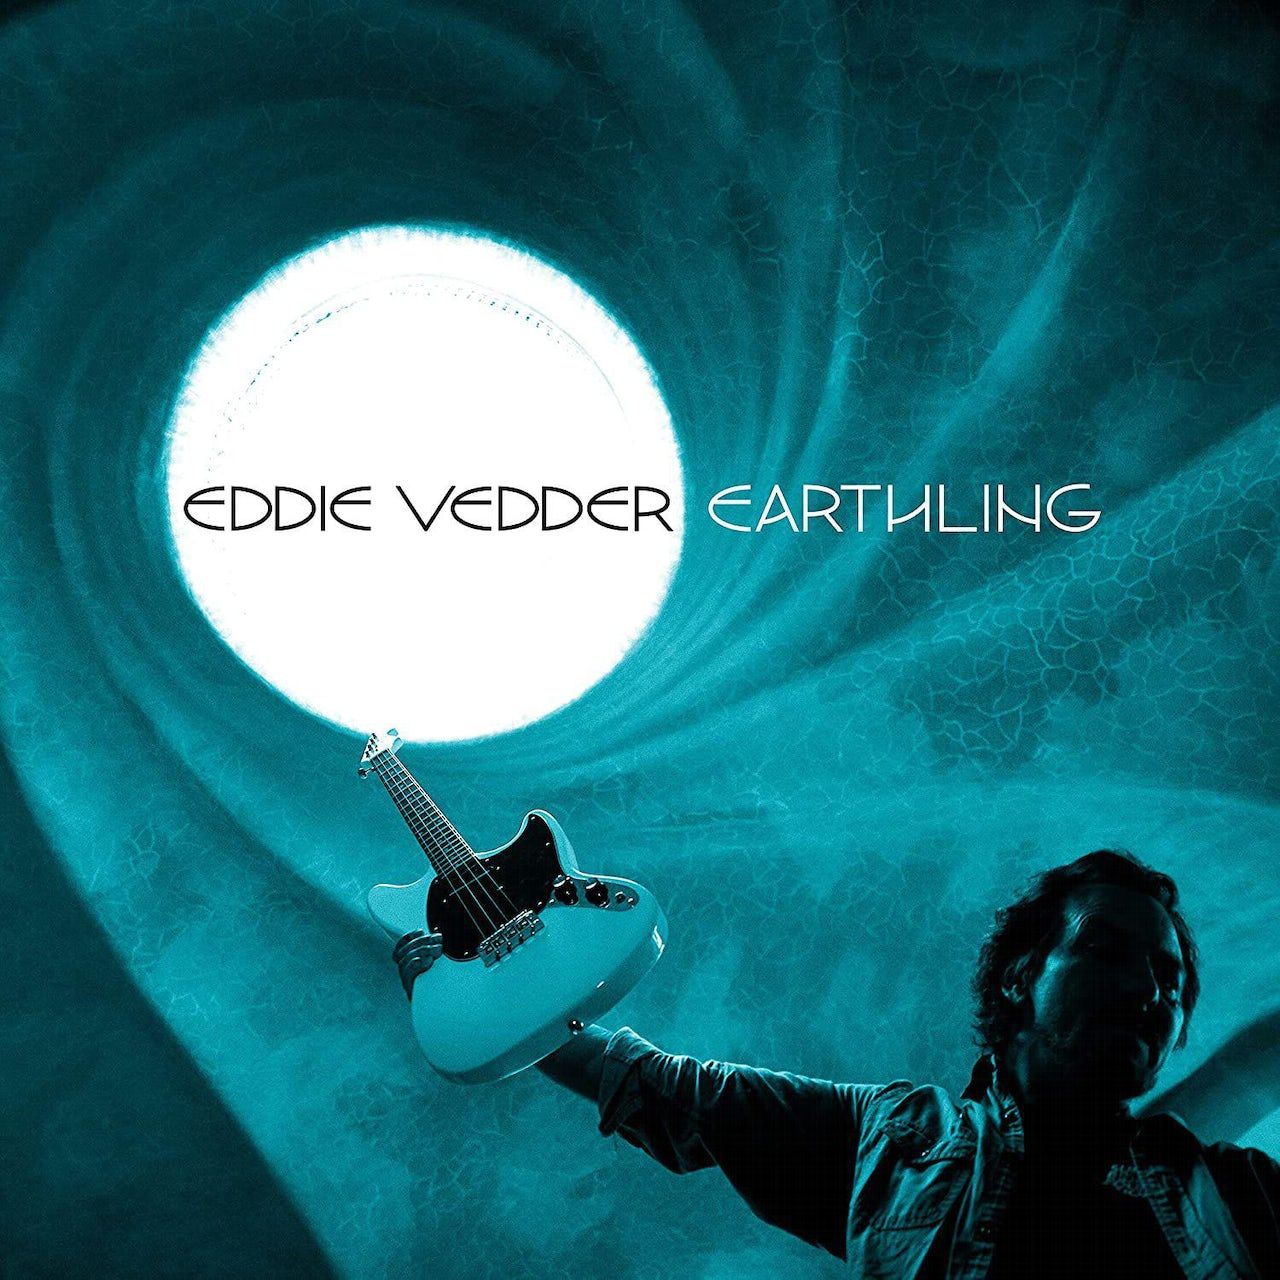 веддер лесли костяное веретено 0602445254286, Виниловая пластинка Vedder, Eddie, Earthling